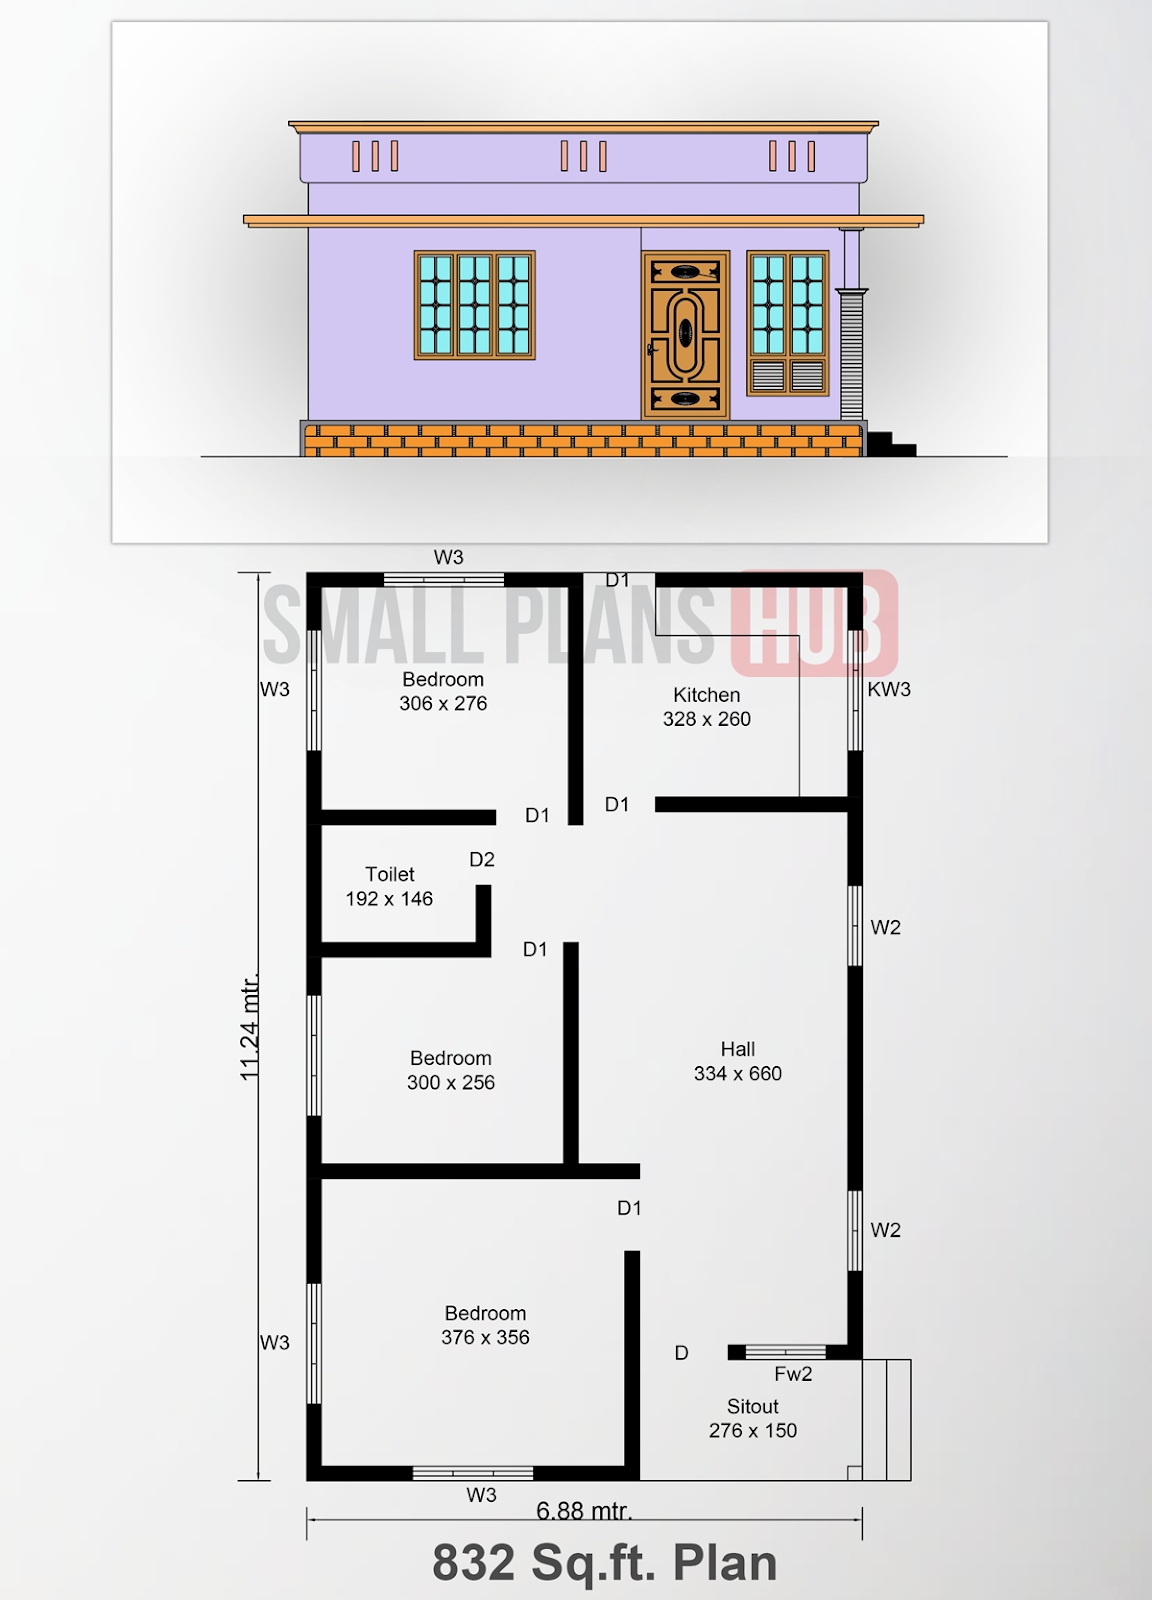 Best five low budget 3 bedroom single floor house designs under 1000 sq ft with 3 bedroom housing plans